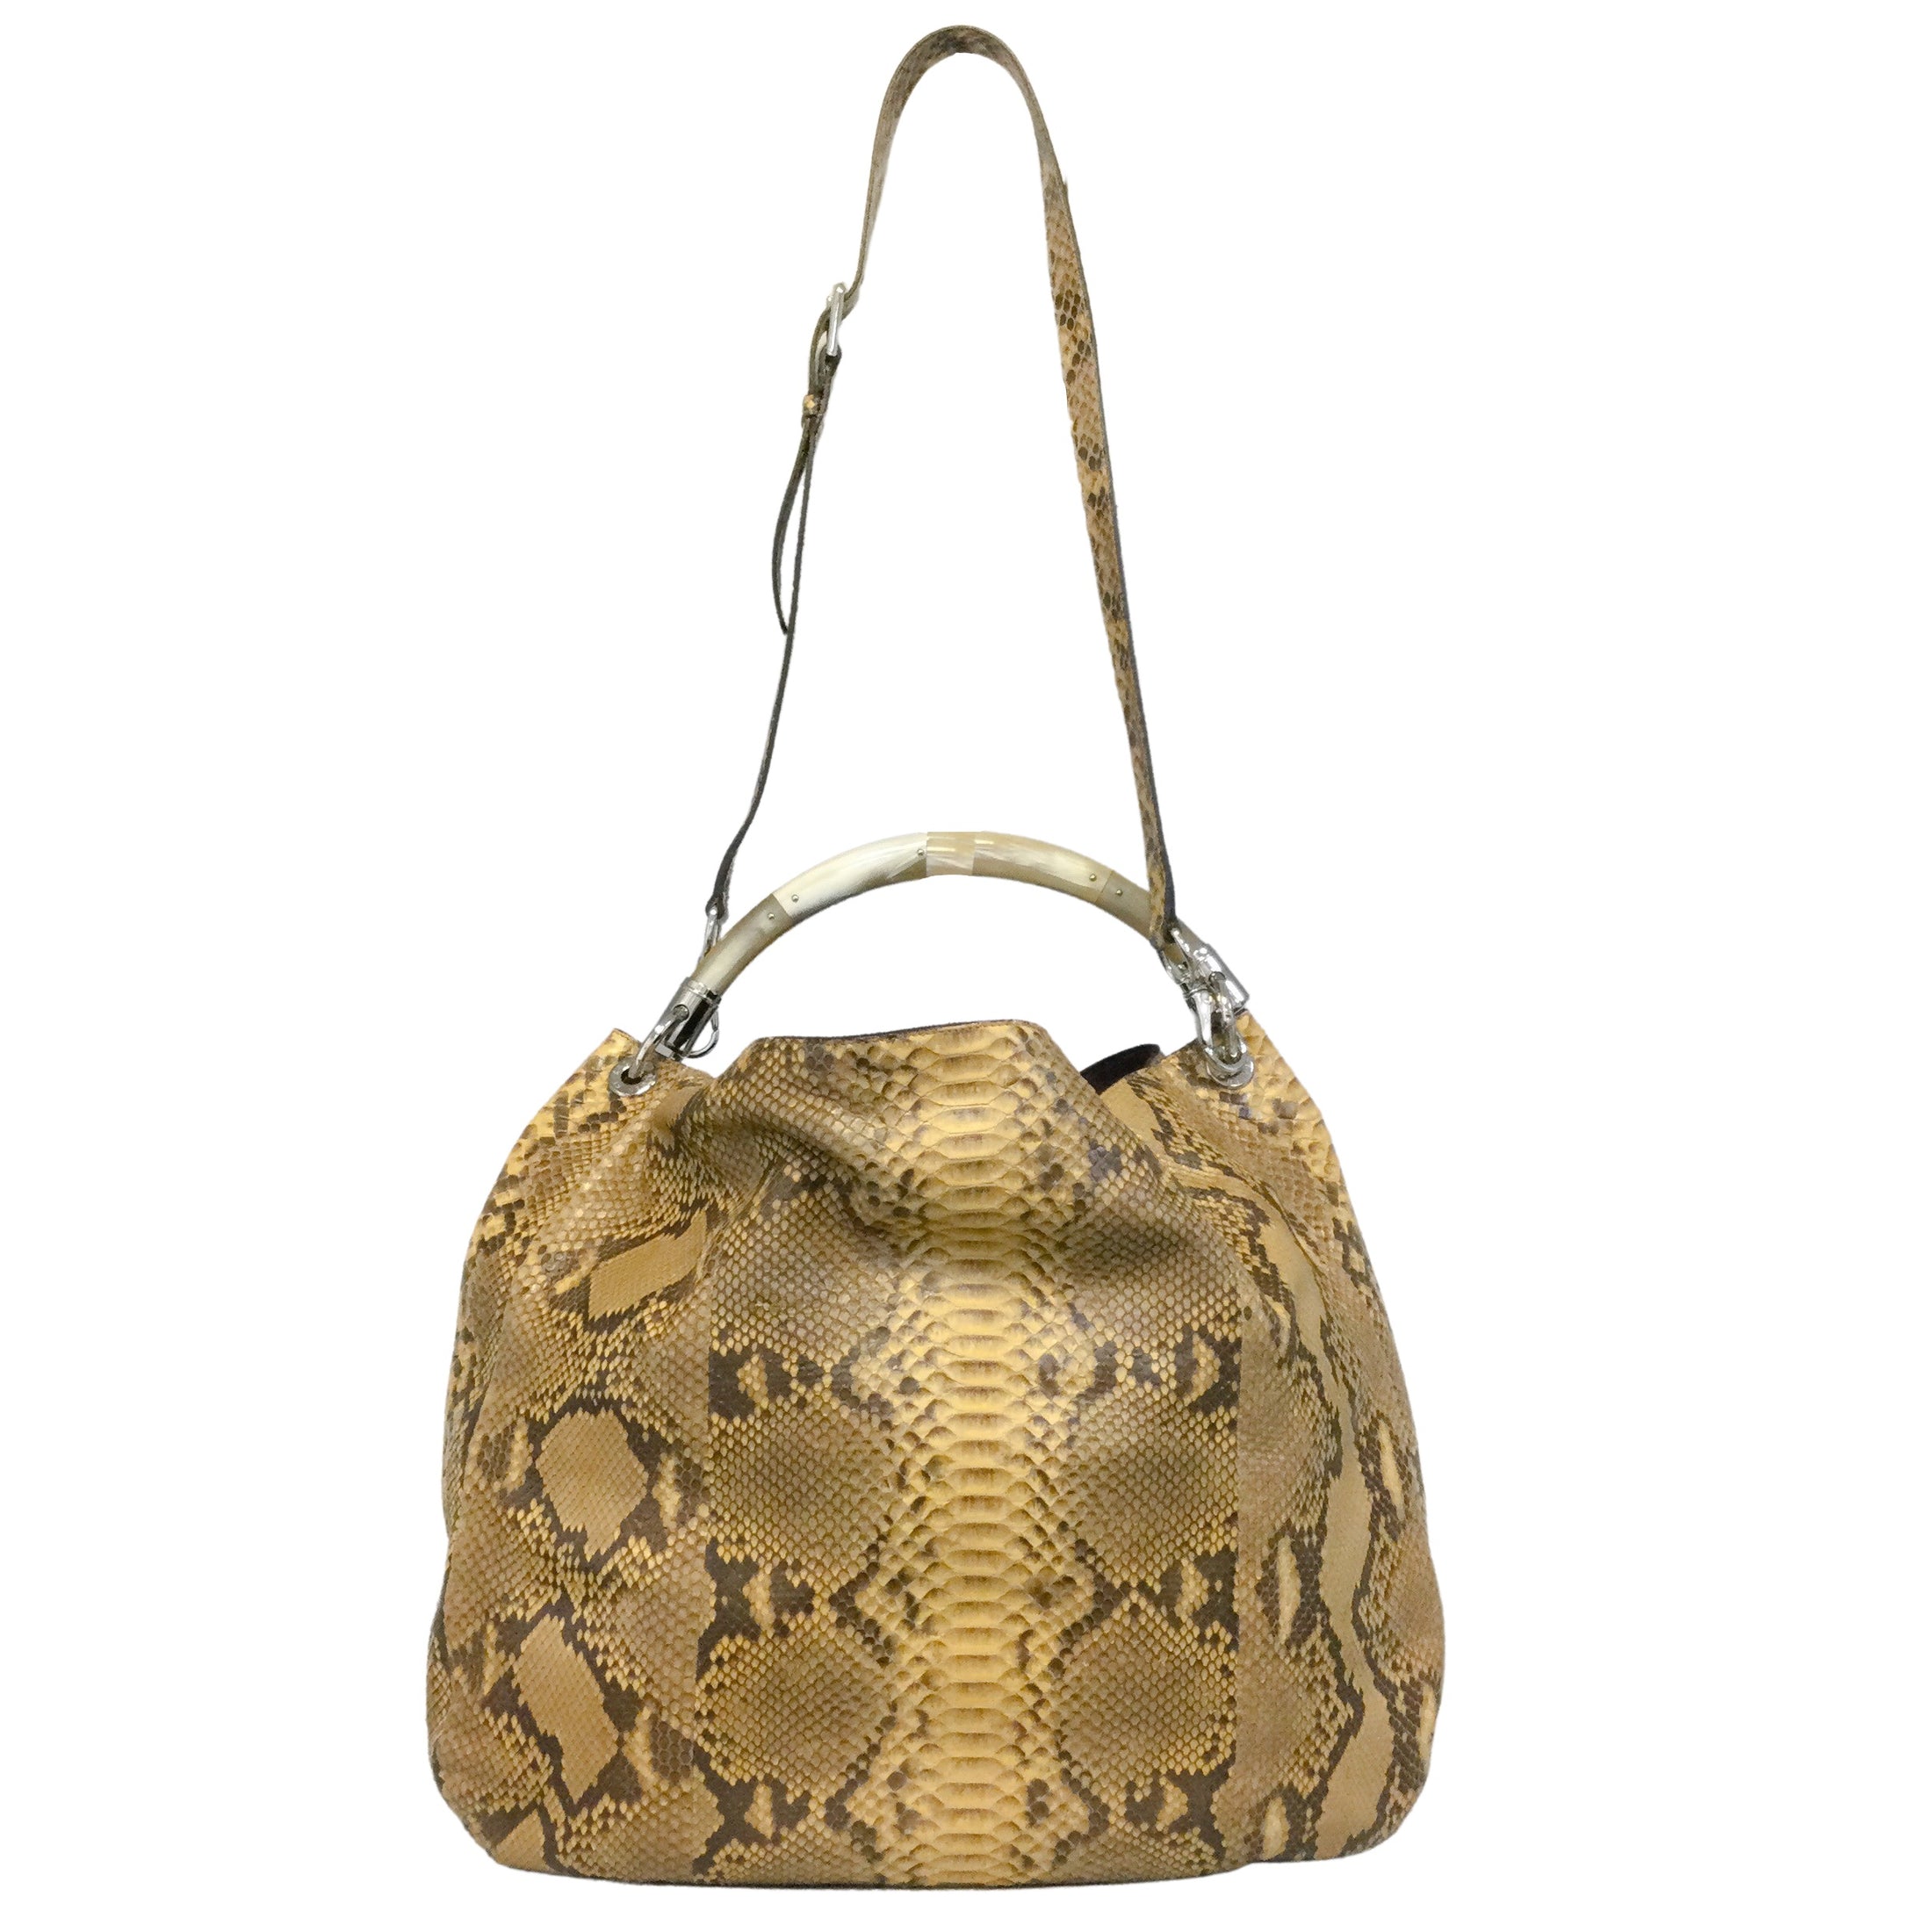 Ralph Lauren Collection Horn Handle Tan / Brown Python Skin Leather Hobo Bag